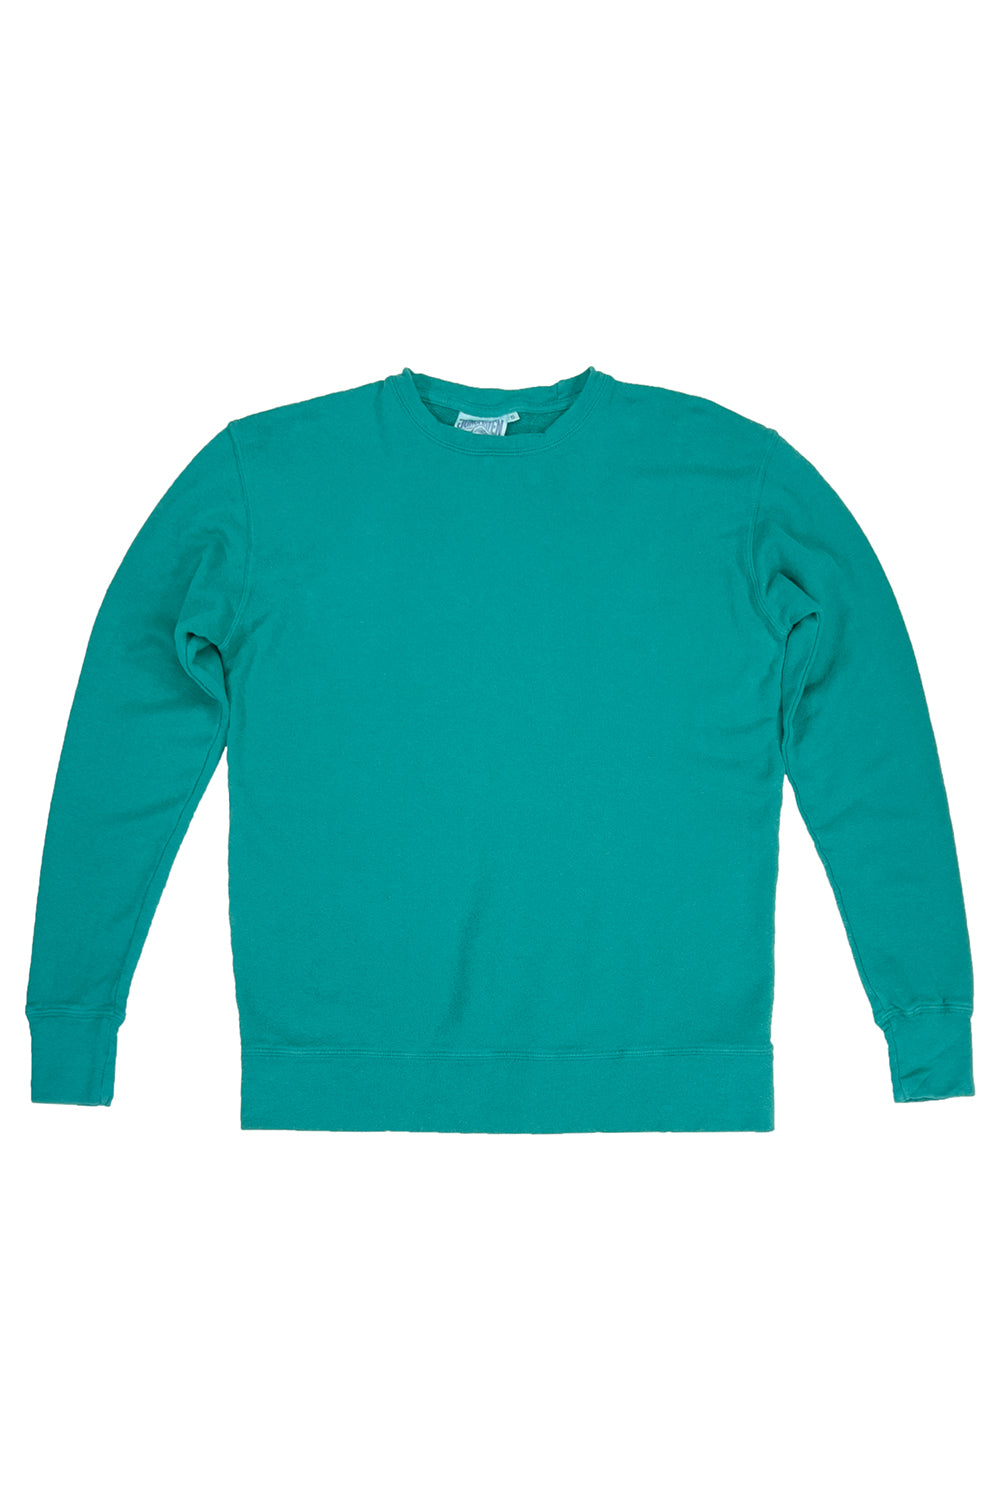 Tahoe Sweatshirt - Sale Colors | Jungmaven Hemp Clothing & Accessories / Color: Ivy Green